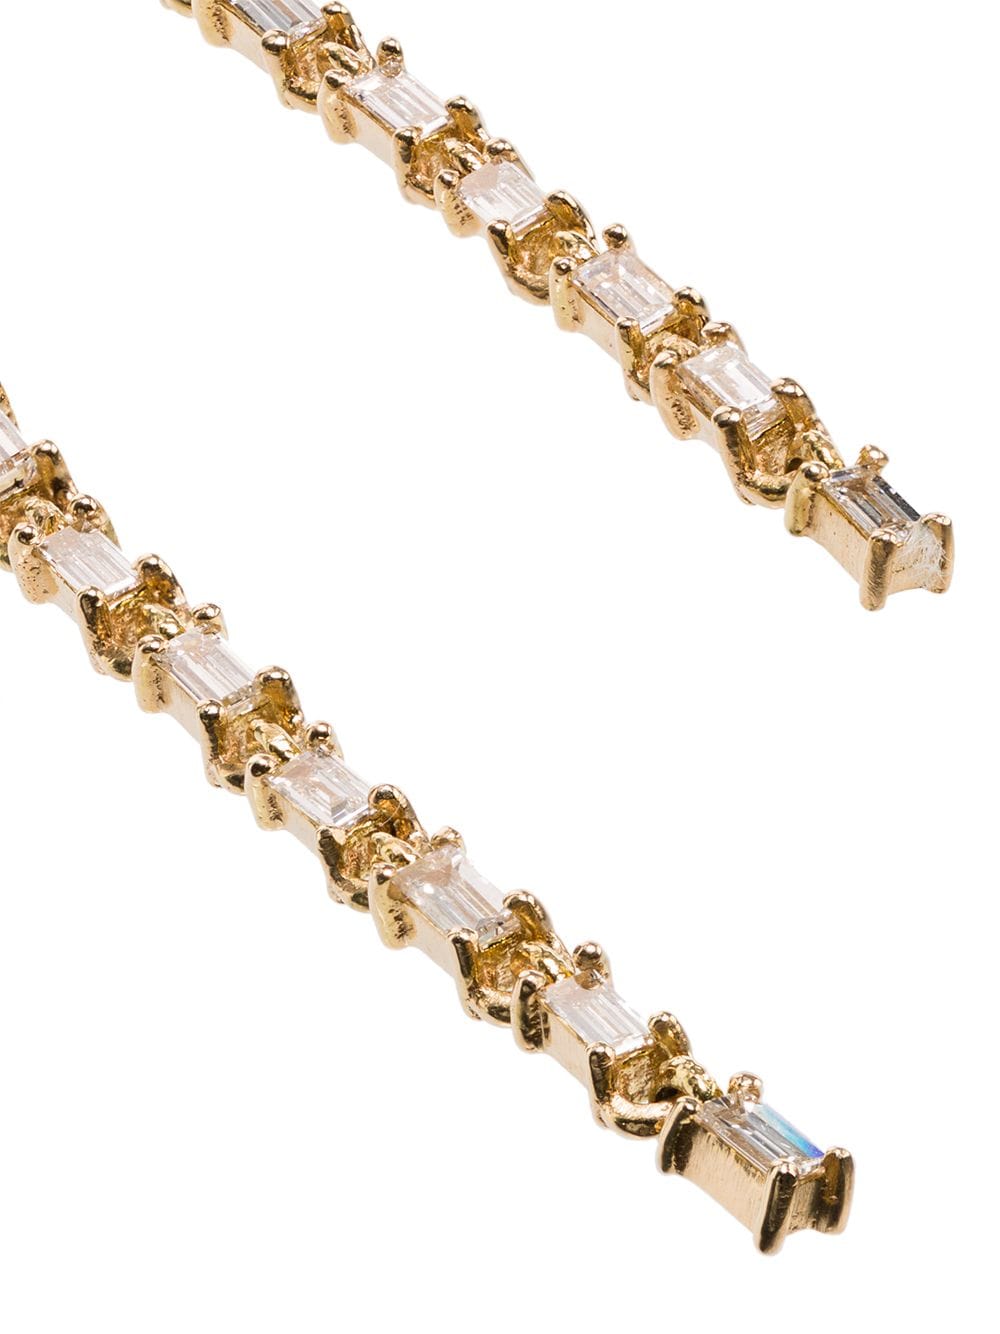 фото Lizzie mandler fine jewelry золотые серьги-подвески с бриллиантами